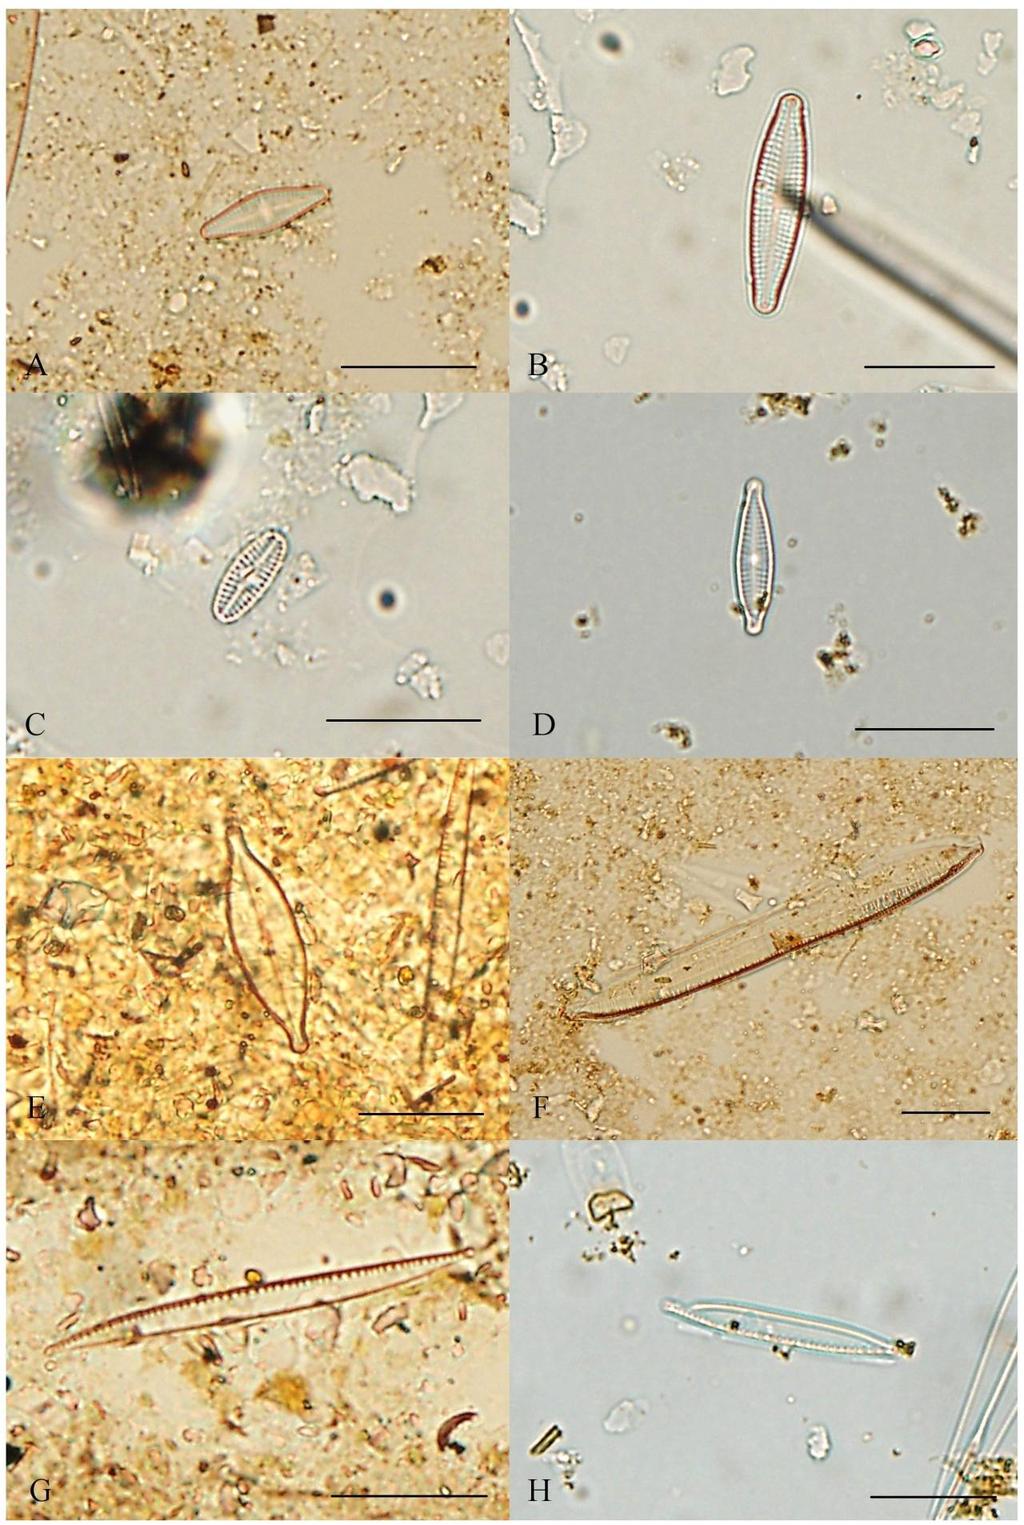 Příloha 14: Fotodokumentace vybraných zástupců Bacillariophyceae III (A Navicula goeppertiana, B Navicula laterostrata, C Navicula